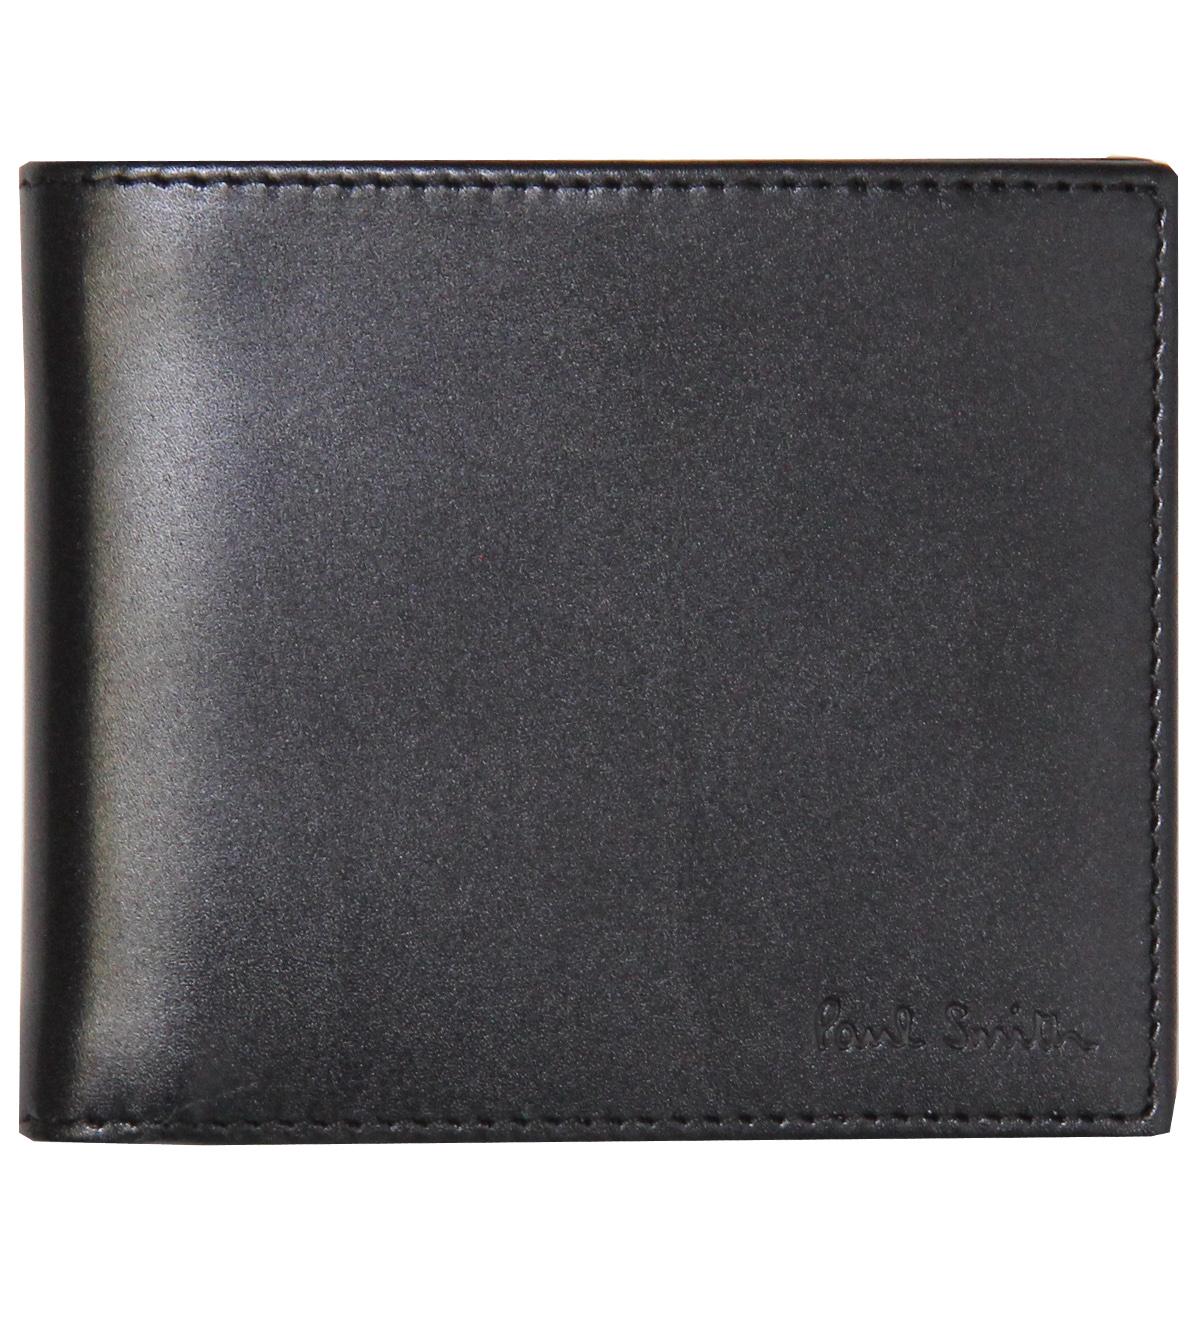 Foto Paul Smith Accessories Black Leather Classic Logo Wallet foto 67776